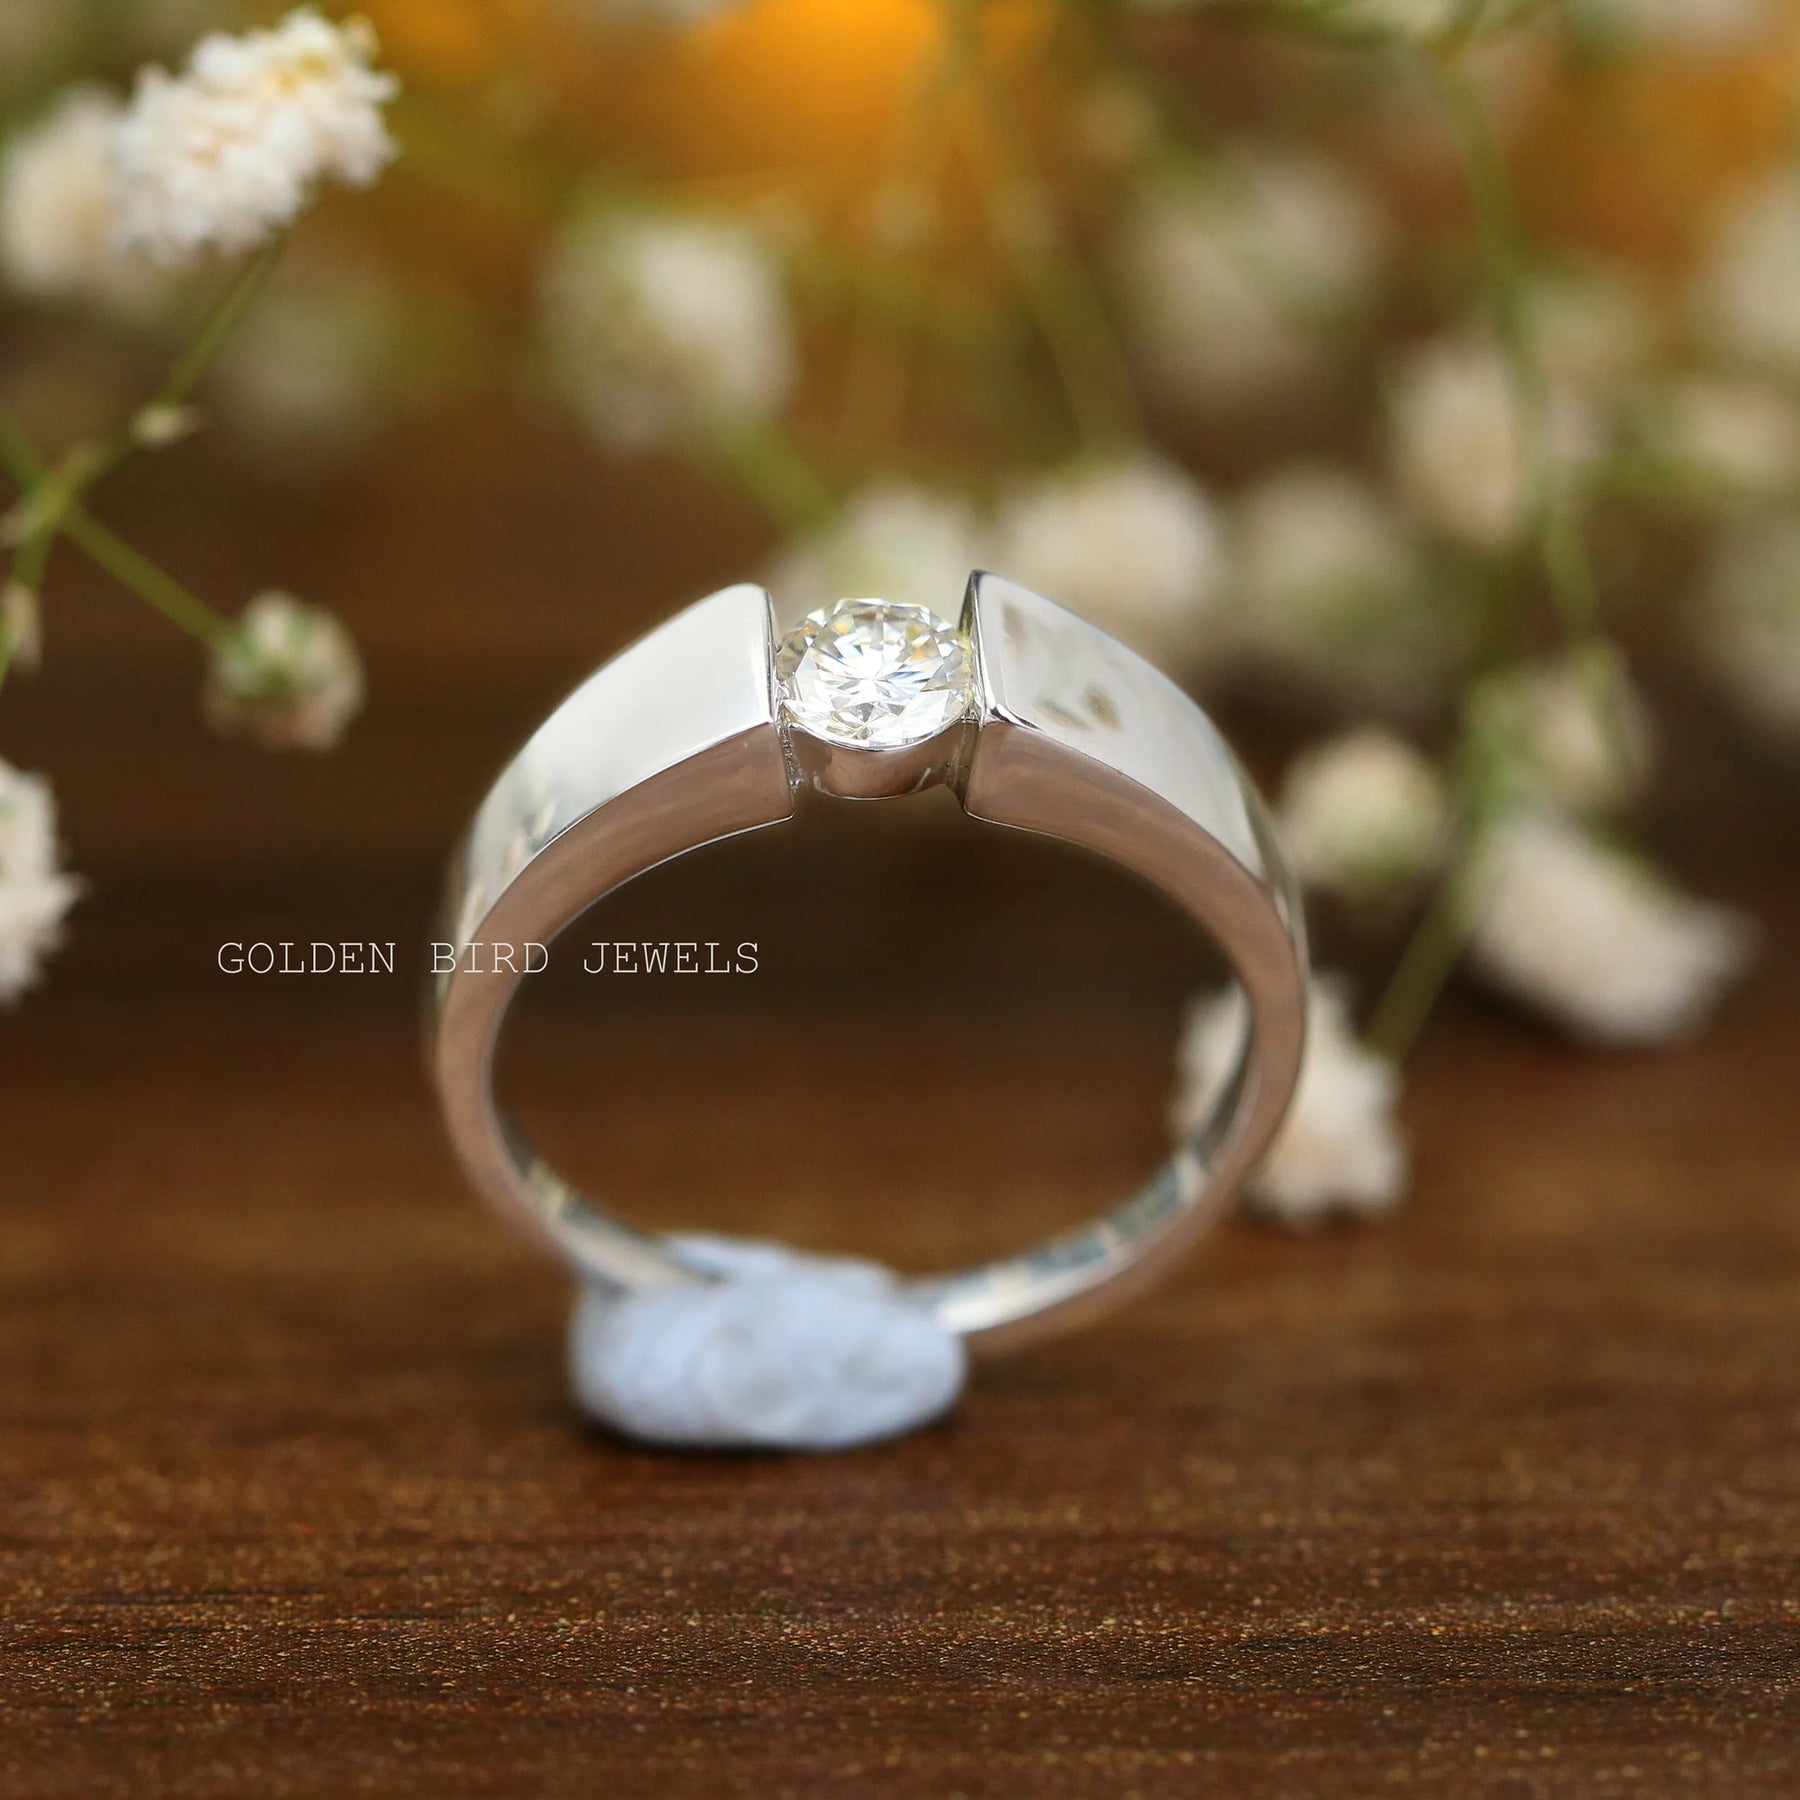 Damascus Meteorite & Crushed Gold Leaf Men Wedding Band Black Hammered Ring  | eBay